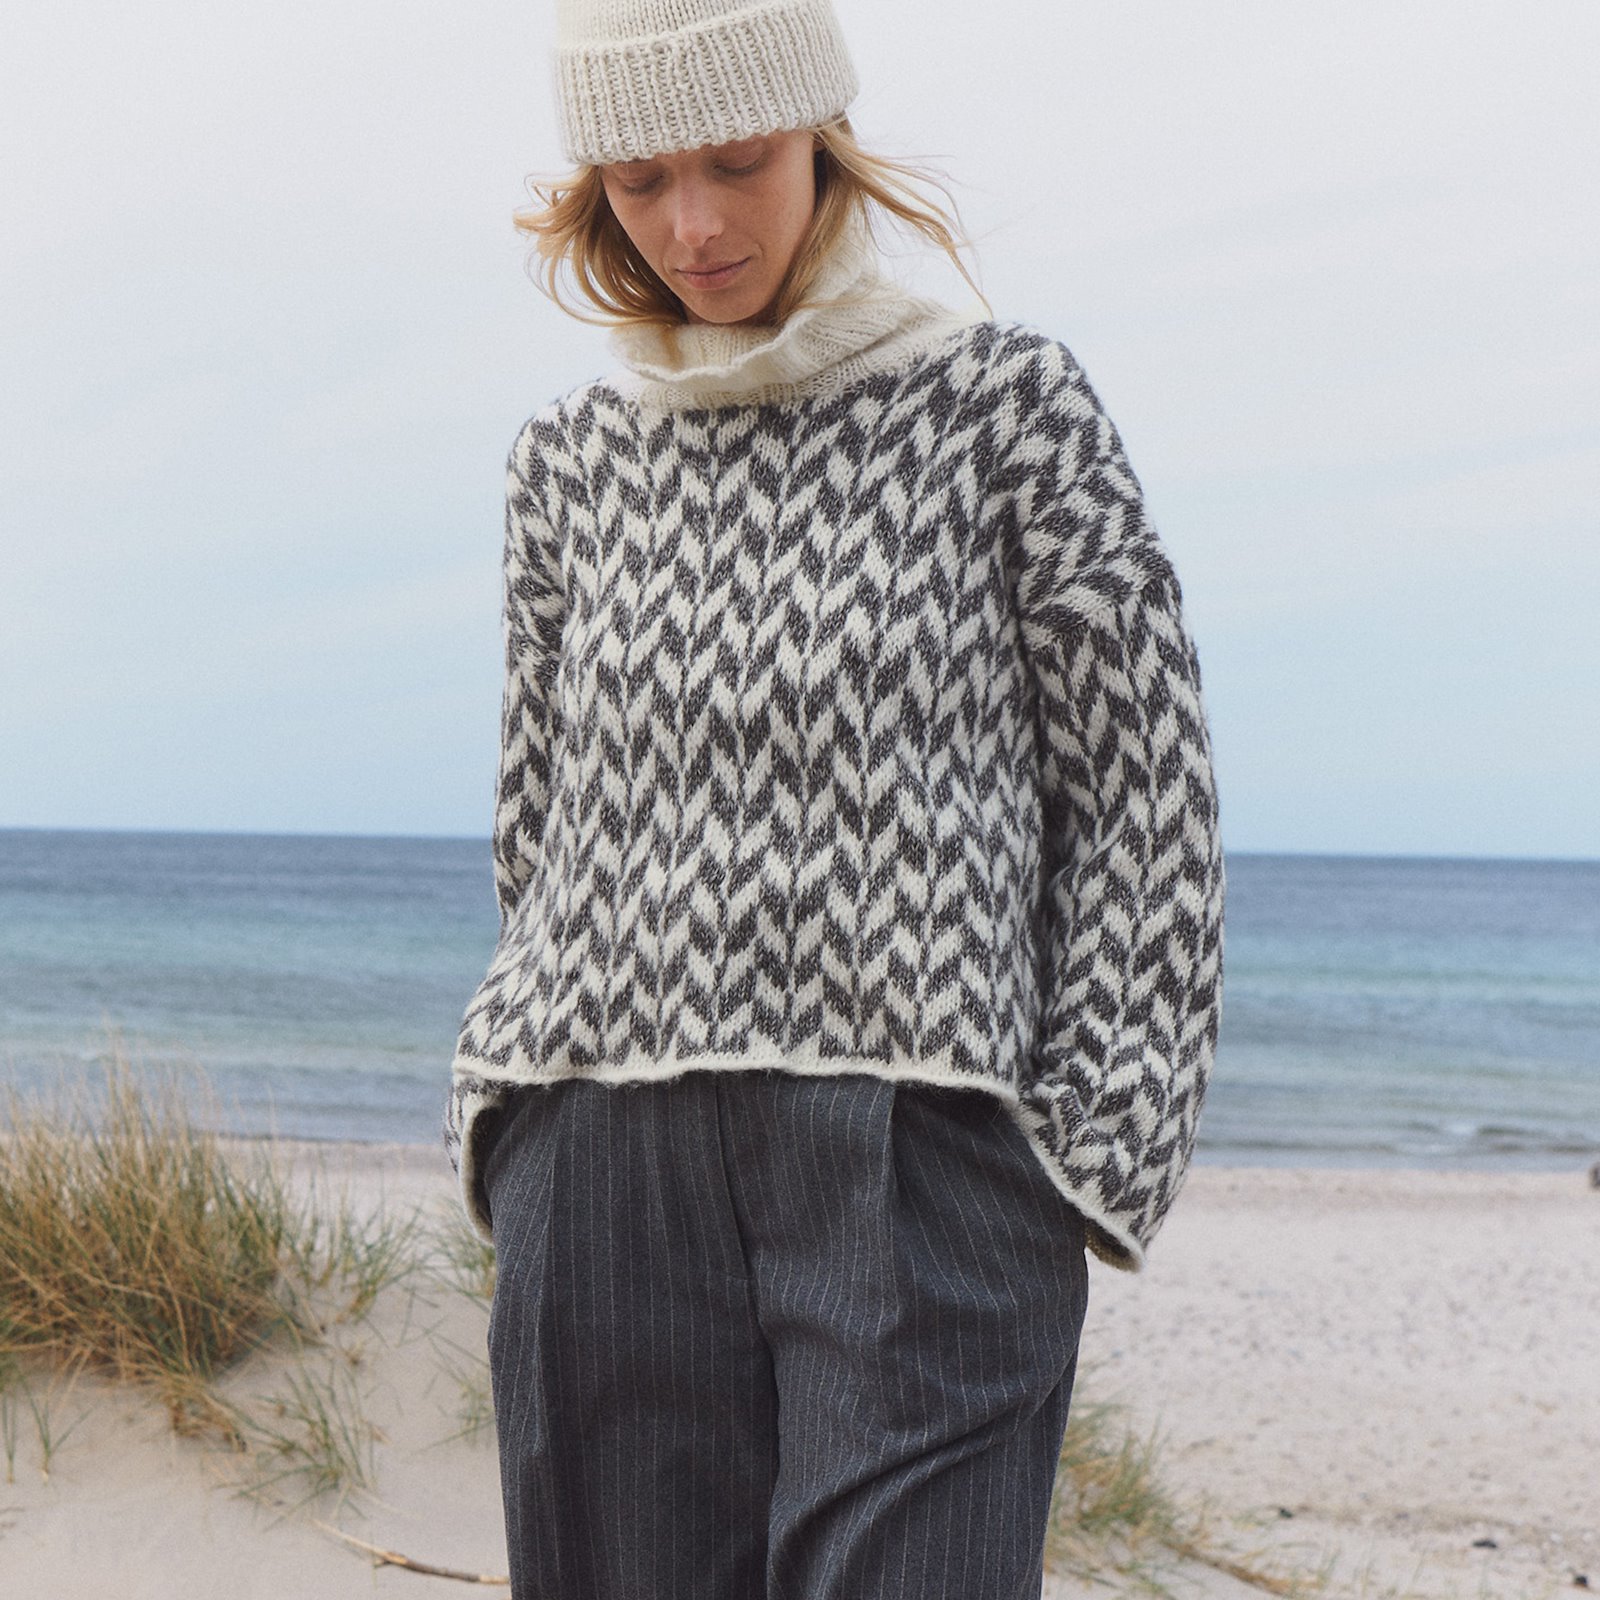 Lana Grossa yarn, knitting pattern: PULLOVER LANA2013_image_b.jpg